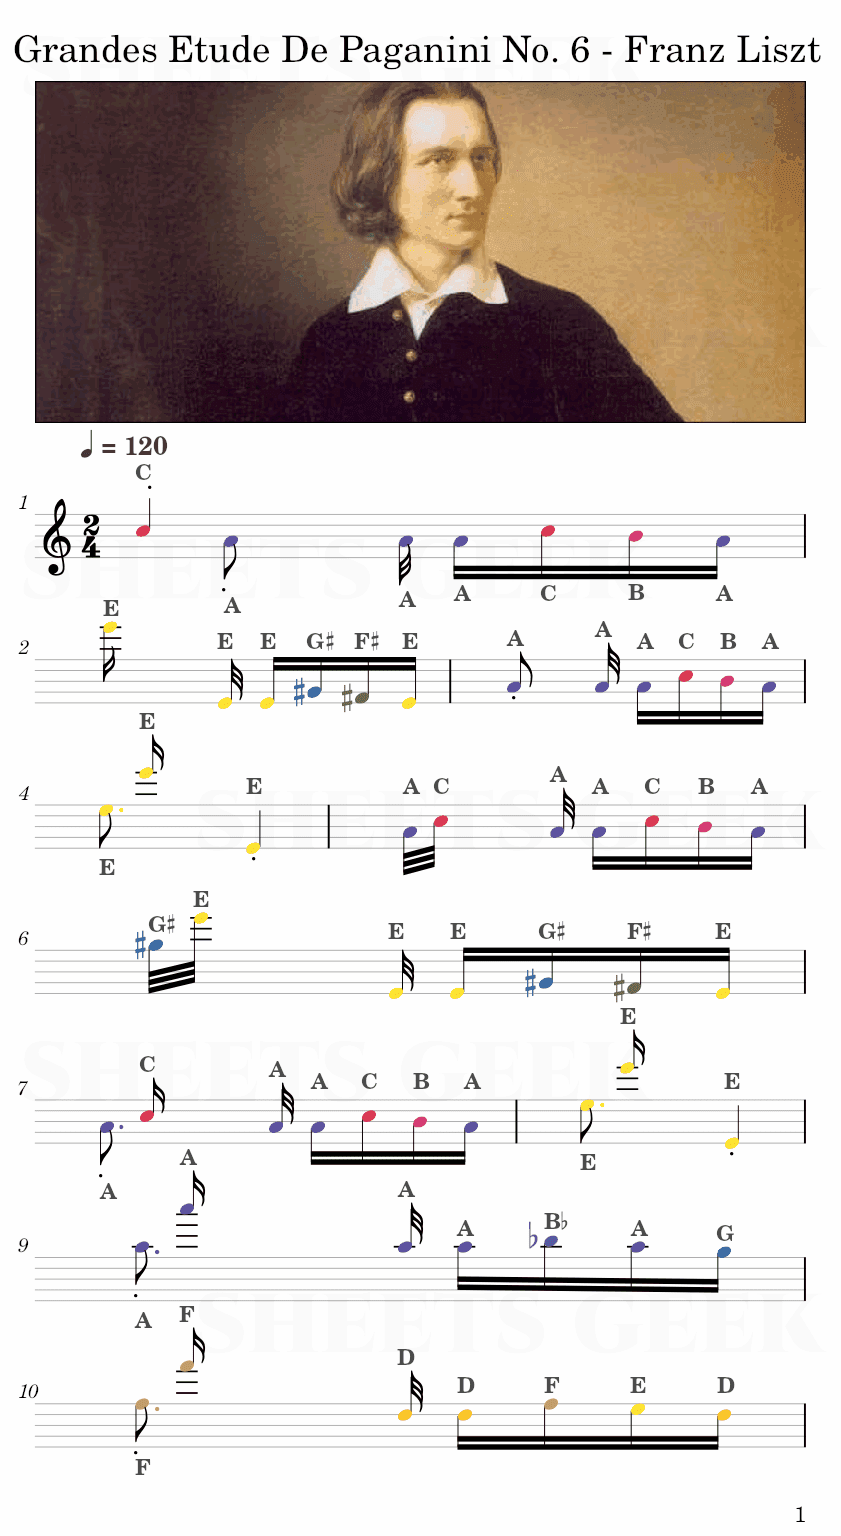 Grandes Etude De Paganini No. 6 - Franz Liszt Easy Sheet Music Free for piano, keyboard, flute, violin, sax, cello page 1